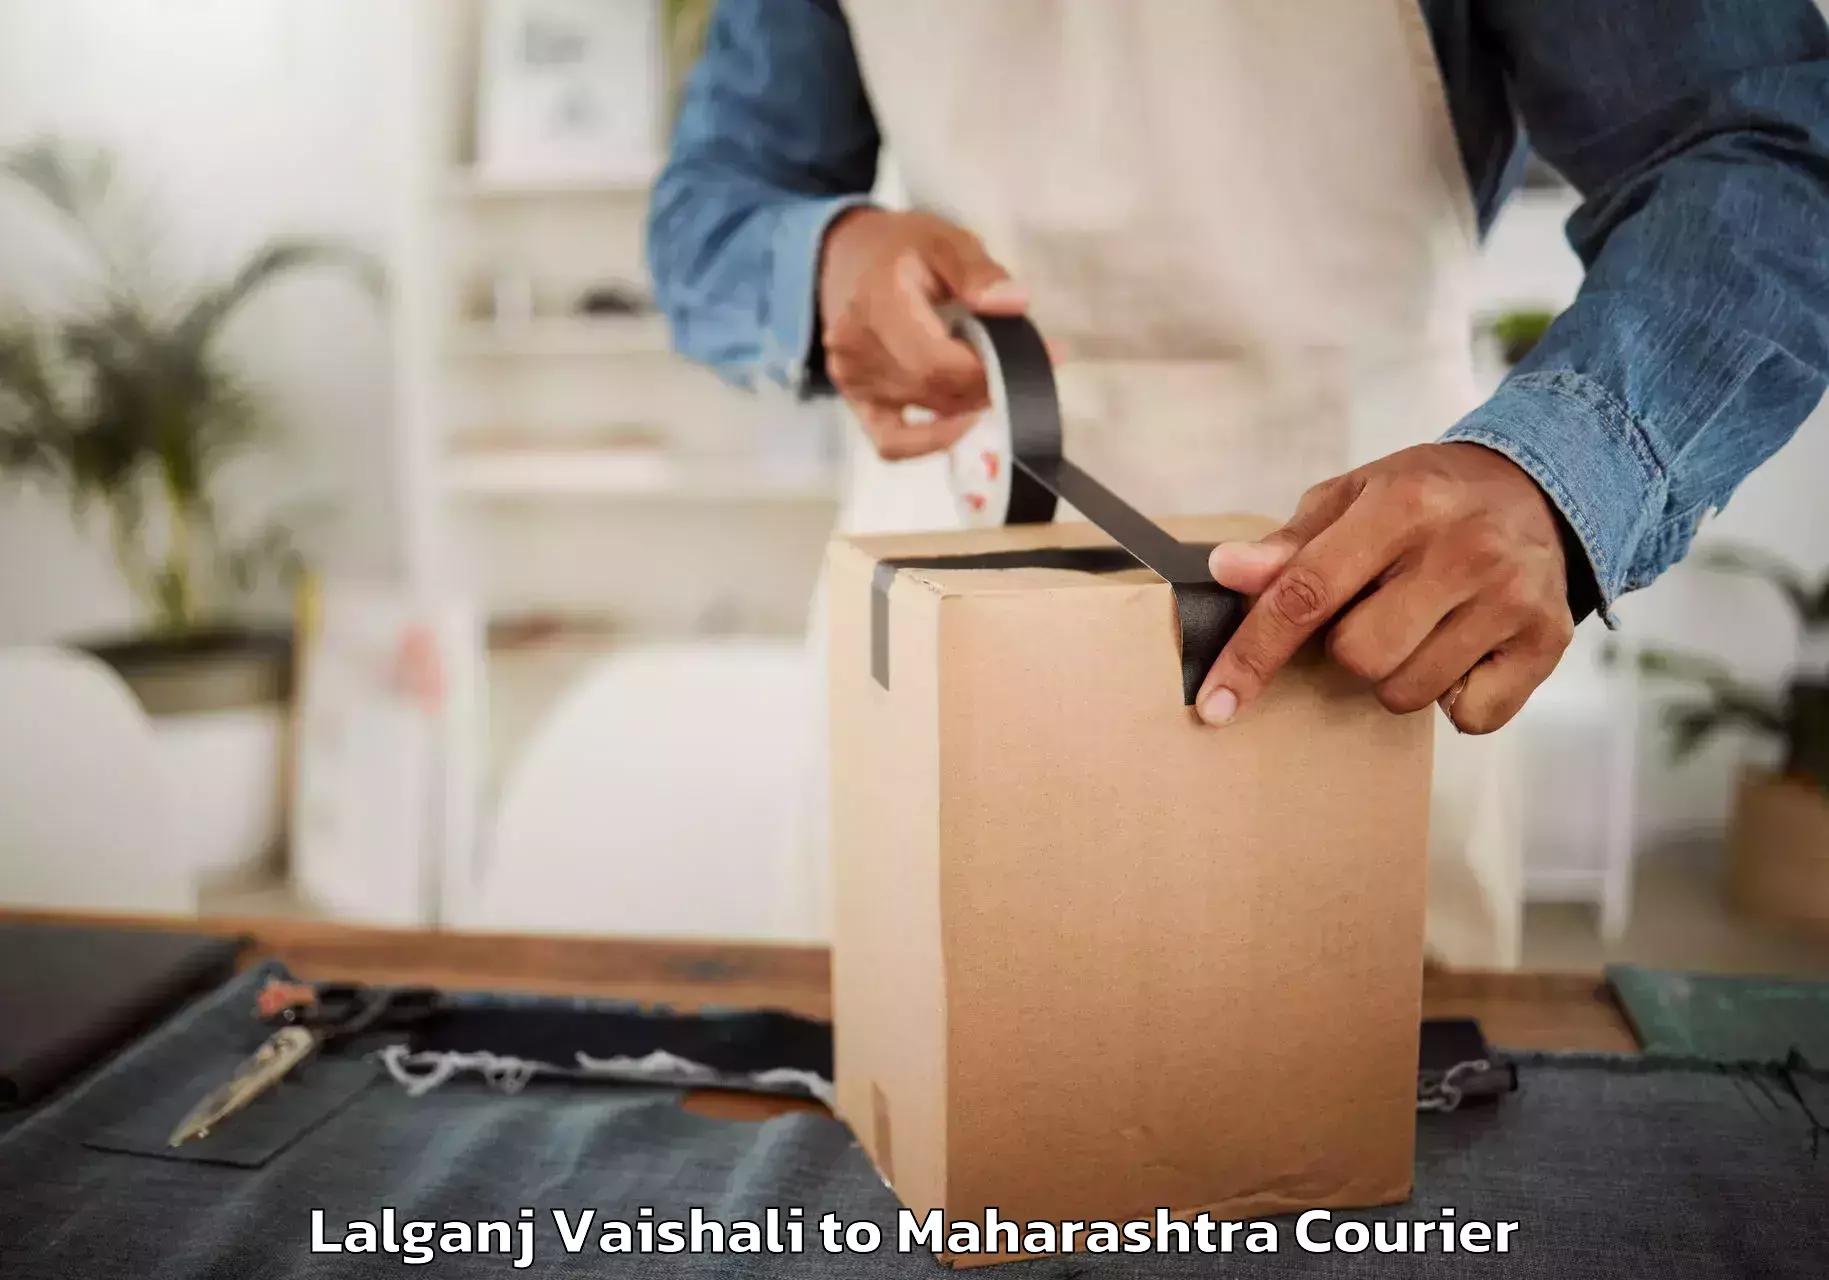 Furniture transport experts Lalganj Vaishali to Lonavala